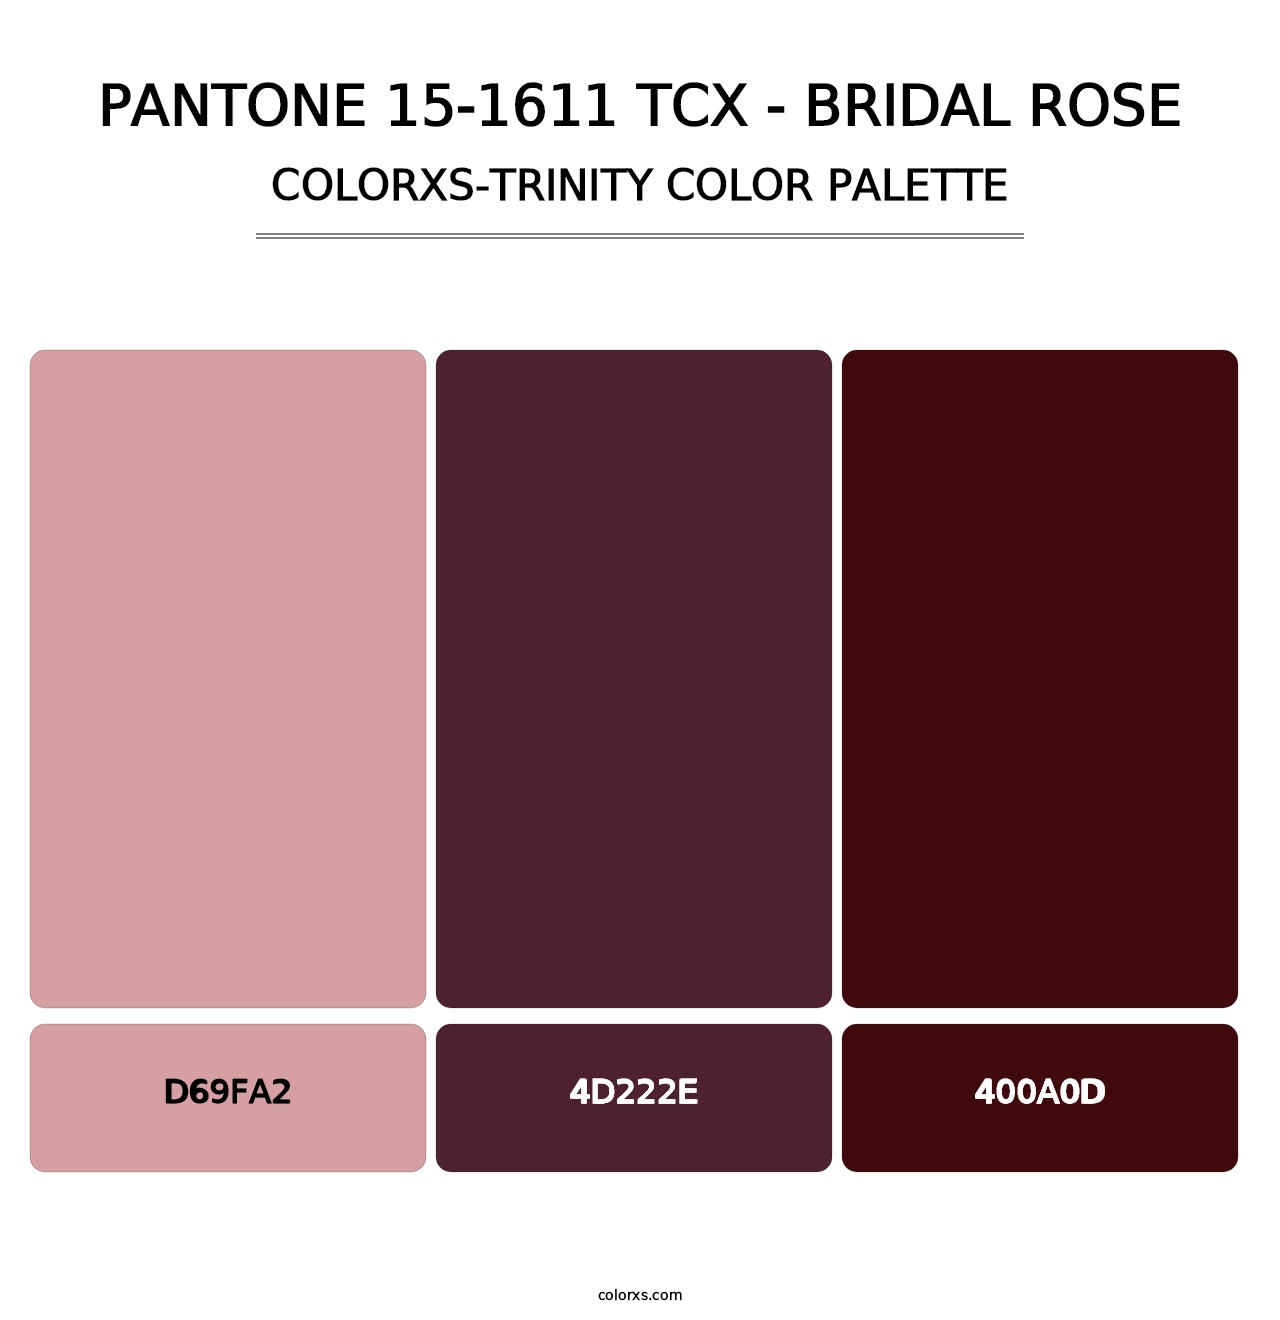 PANTONE 15-1611 TCX - Bridal Rose - Colorxs Trinity Palette